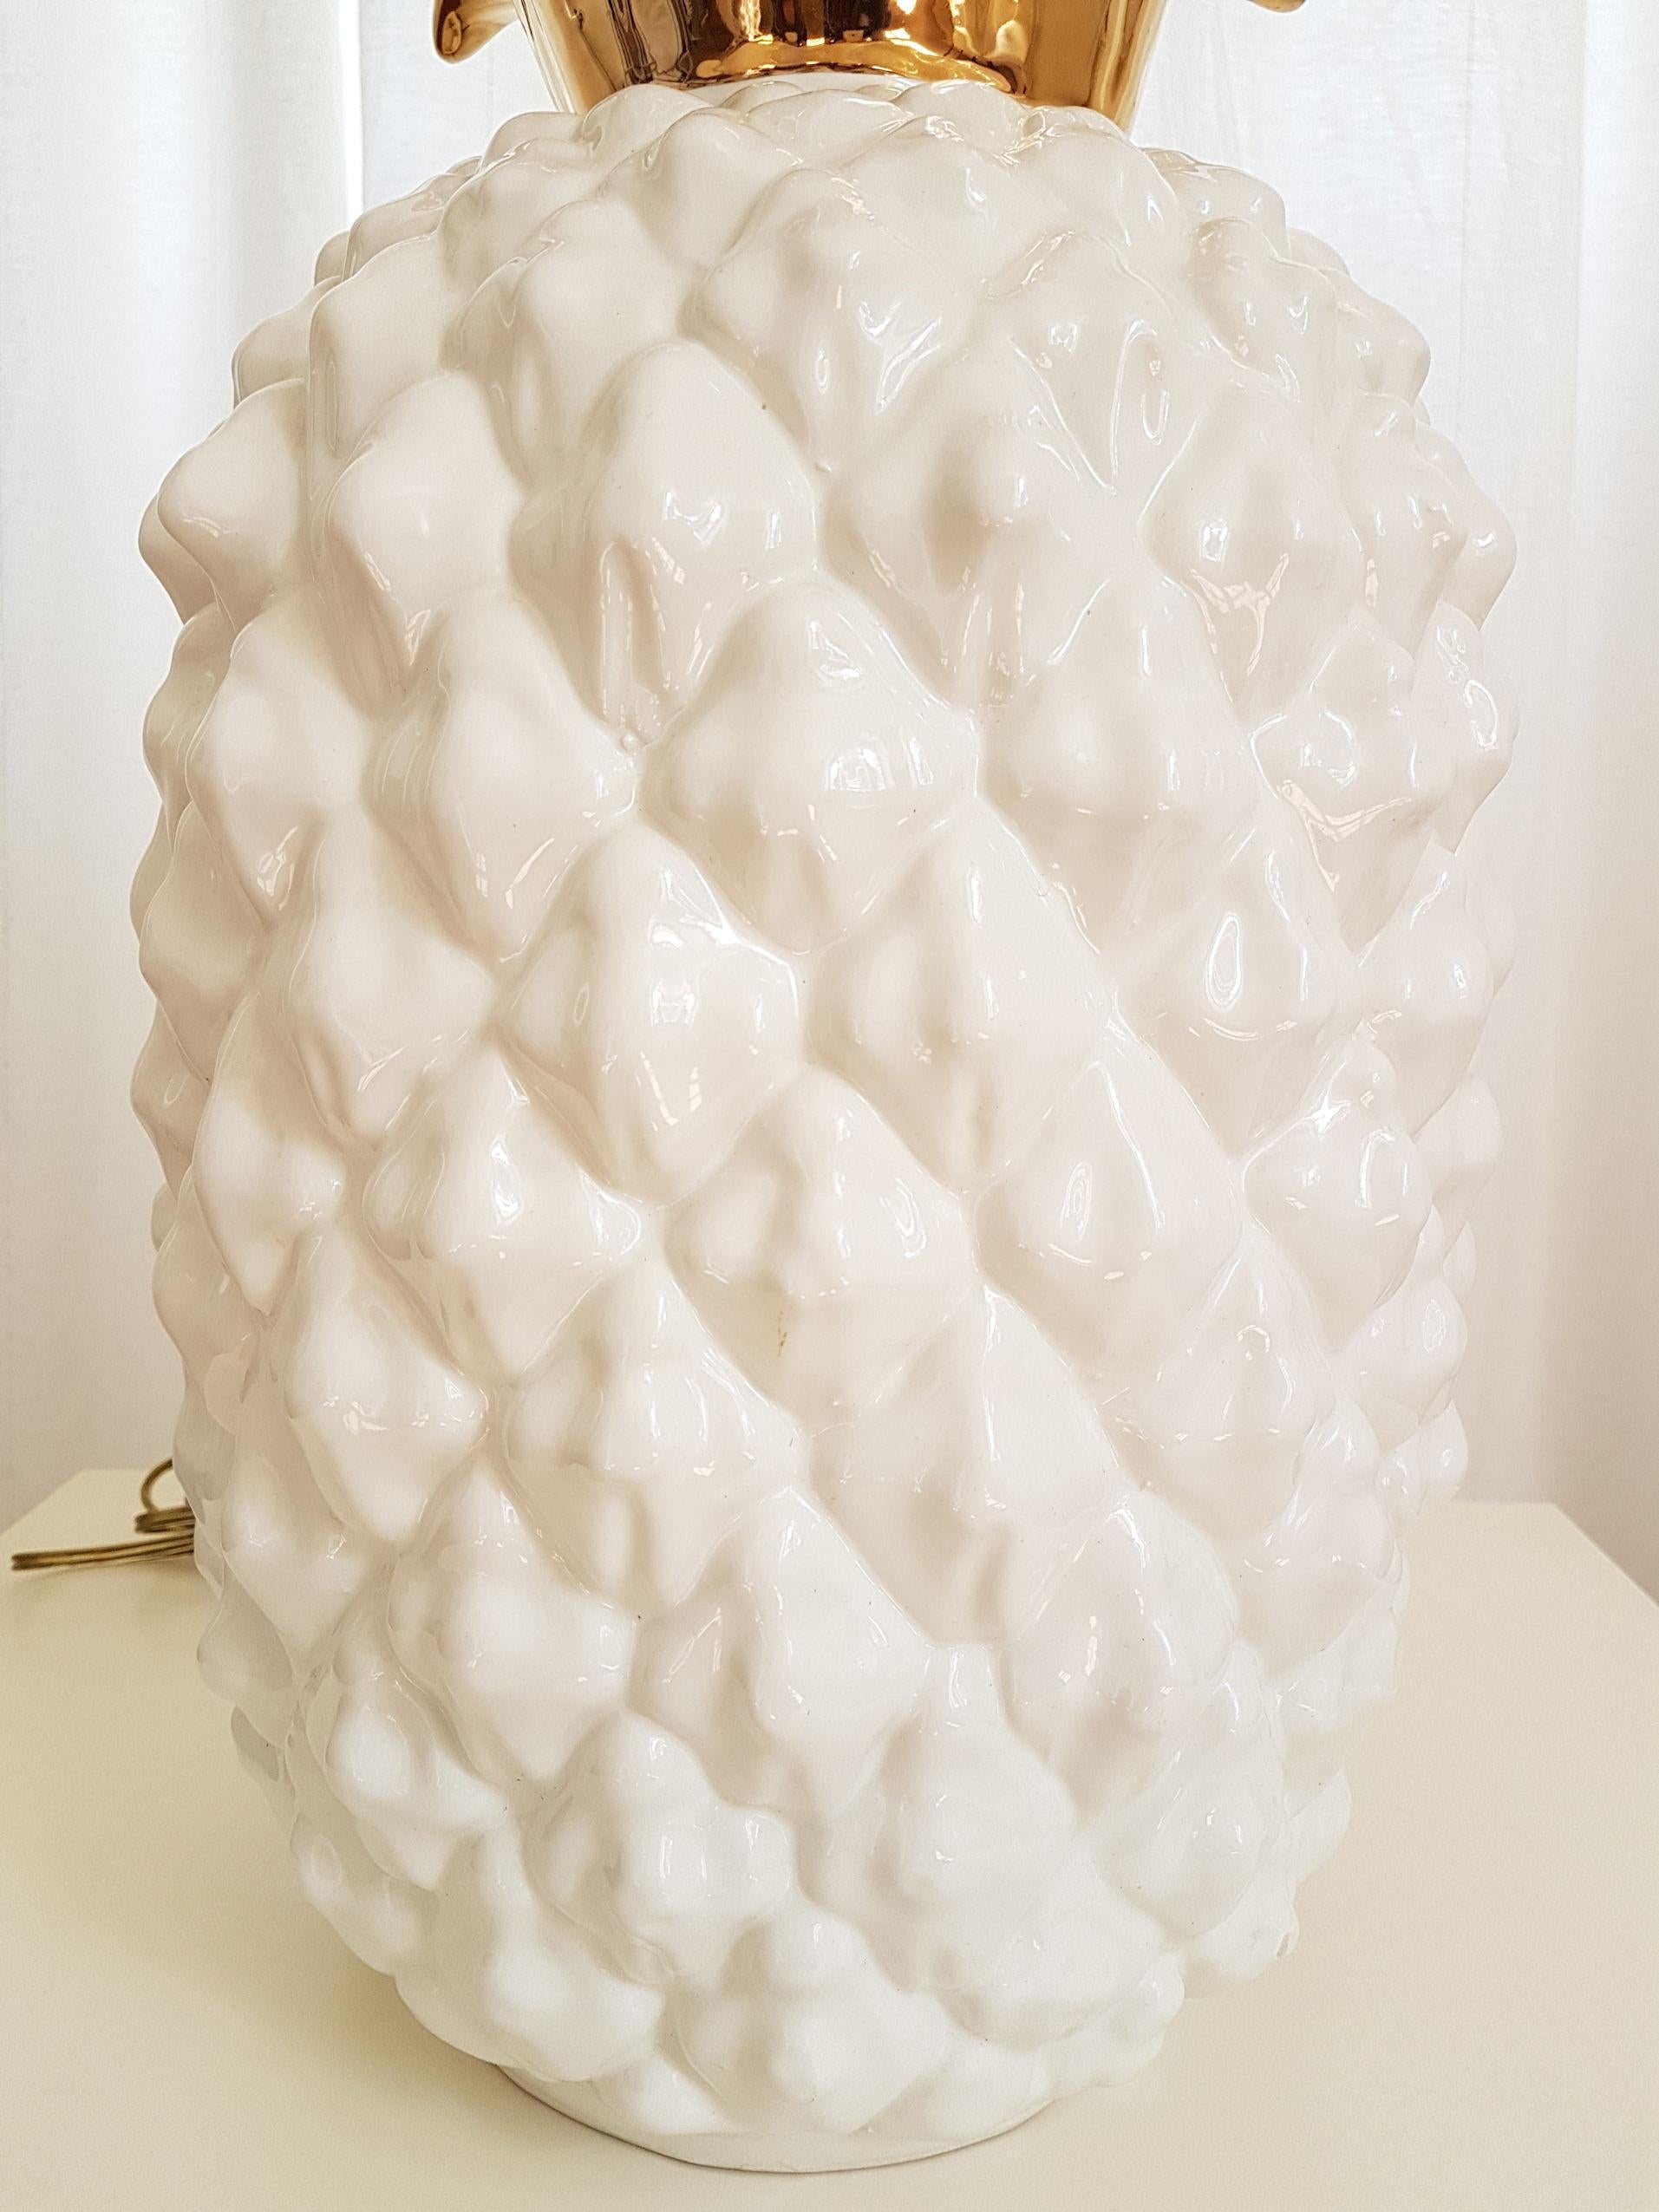 Italian Large Mid-Century Modern Ceramic Pineapple Lamp, by Maison Lancel